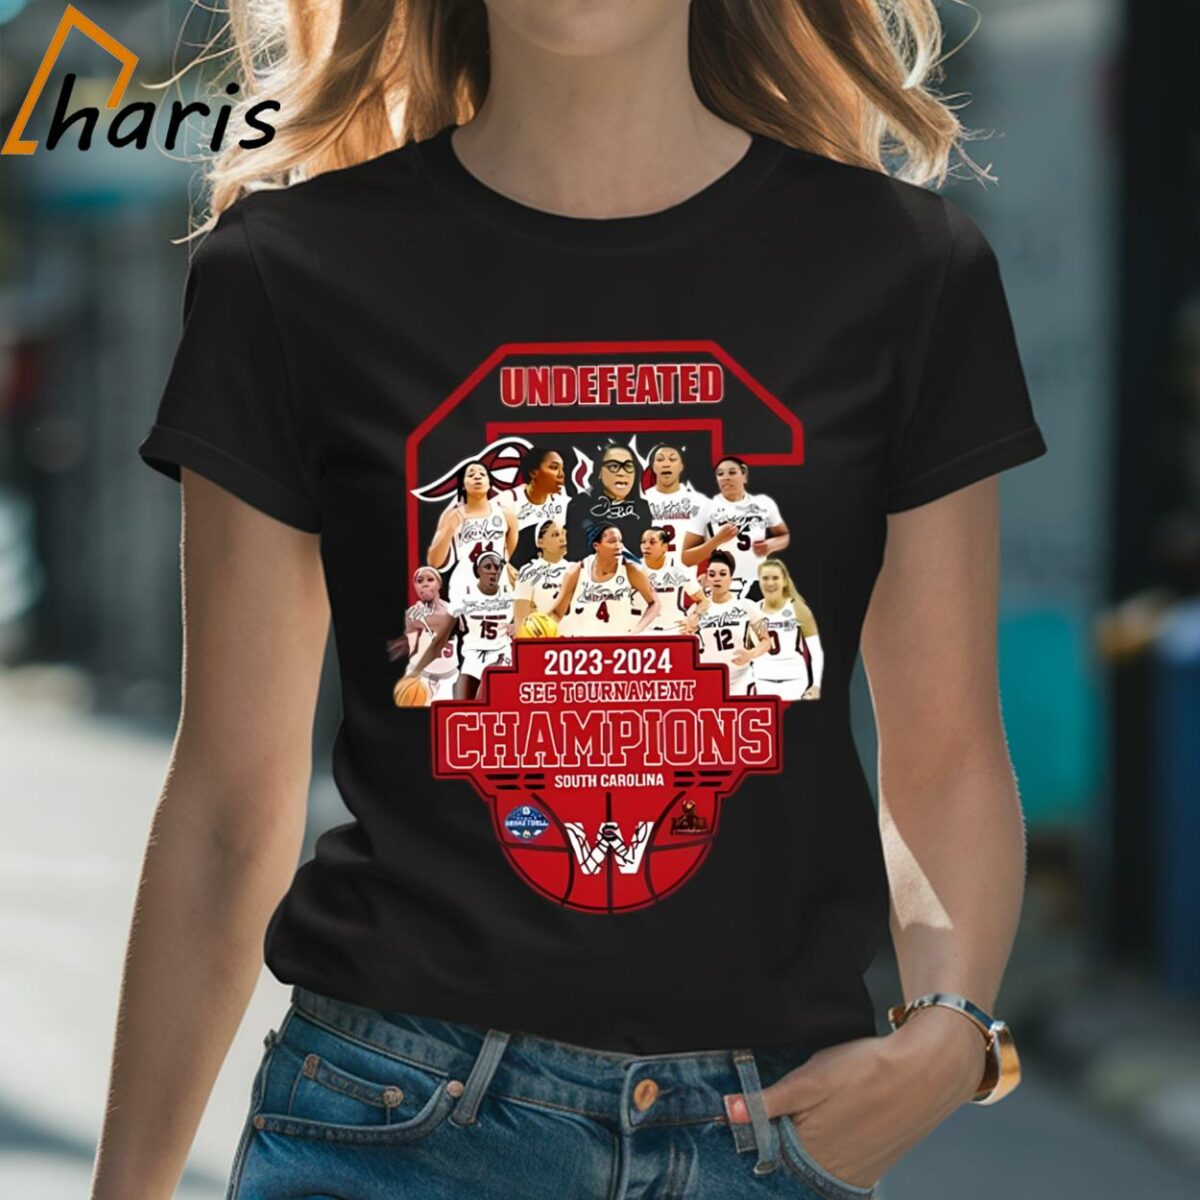 South Carolina Gamecocks NCAA Womens Basketball Tournament Champions 2023 2024 Shirt 2 Shirt